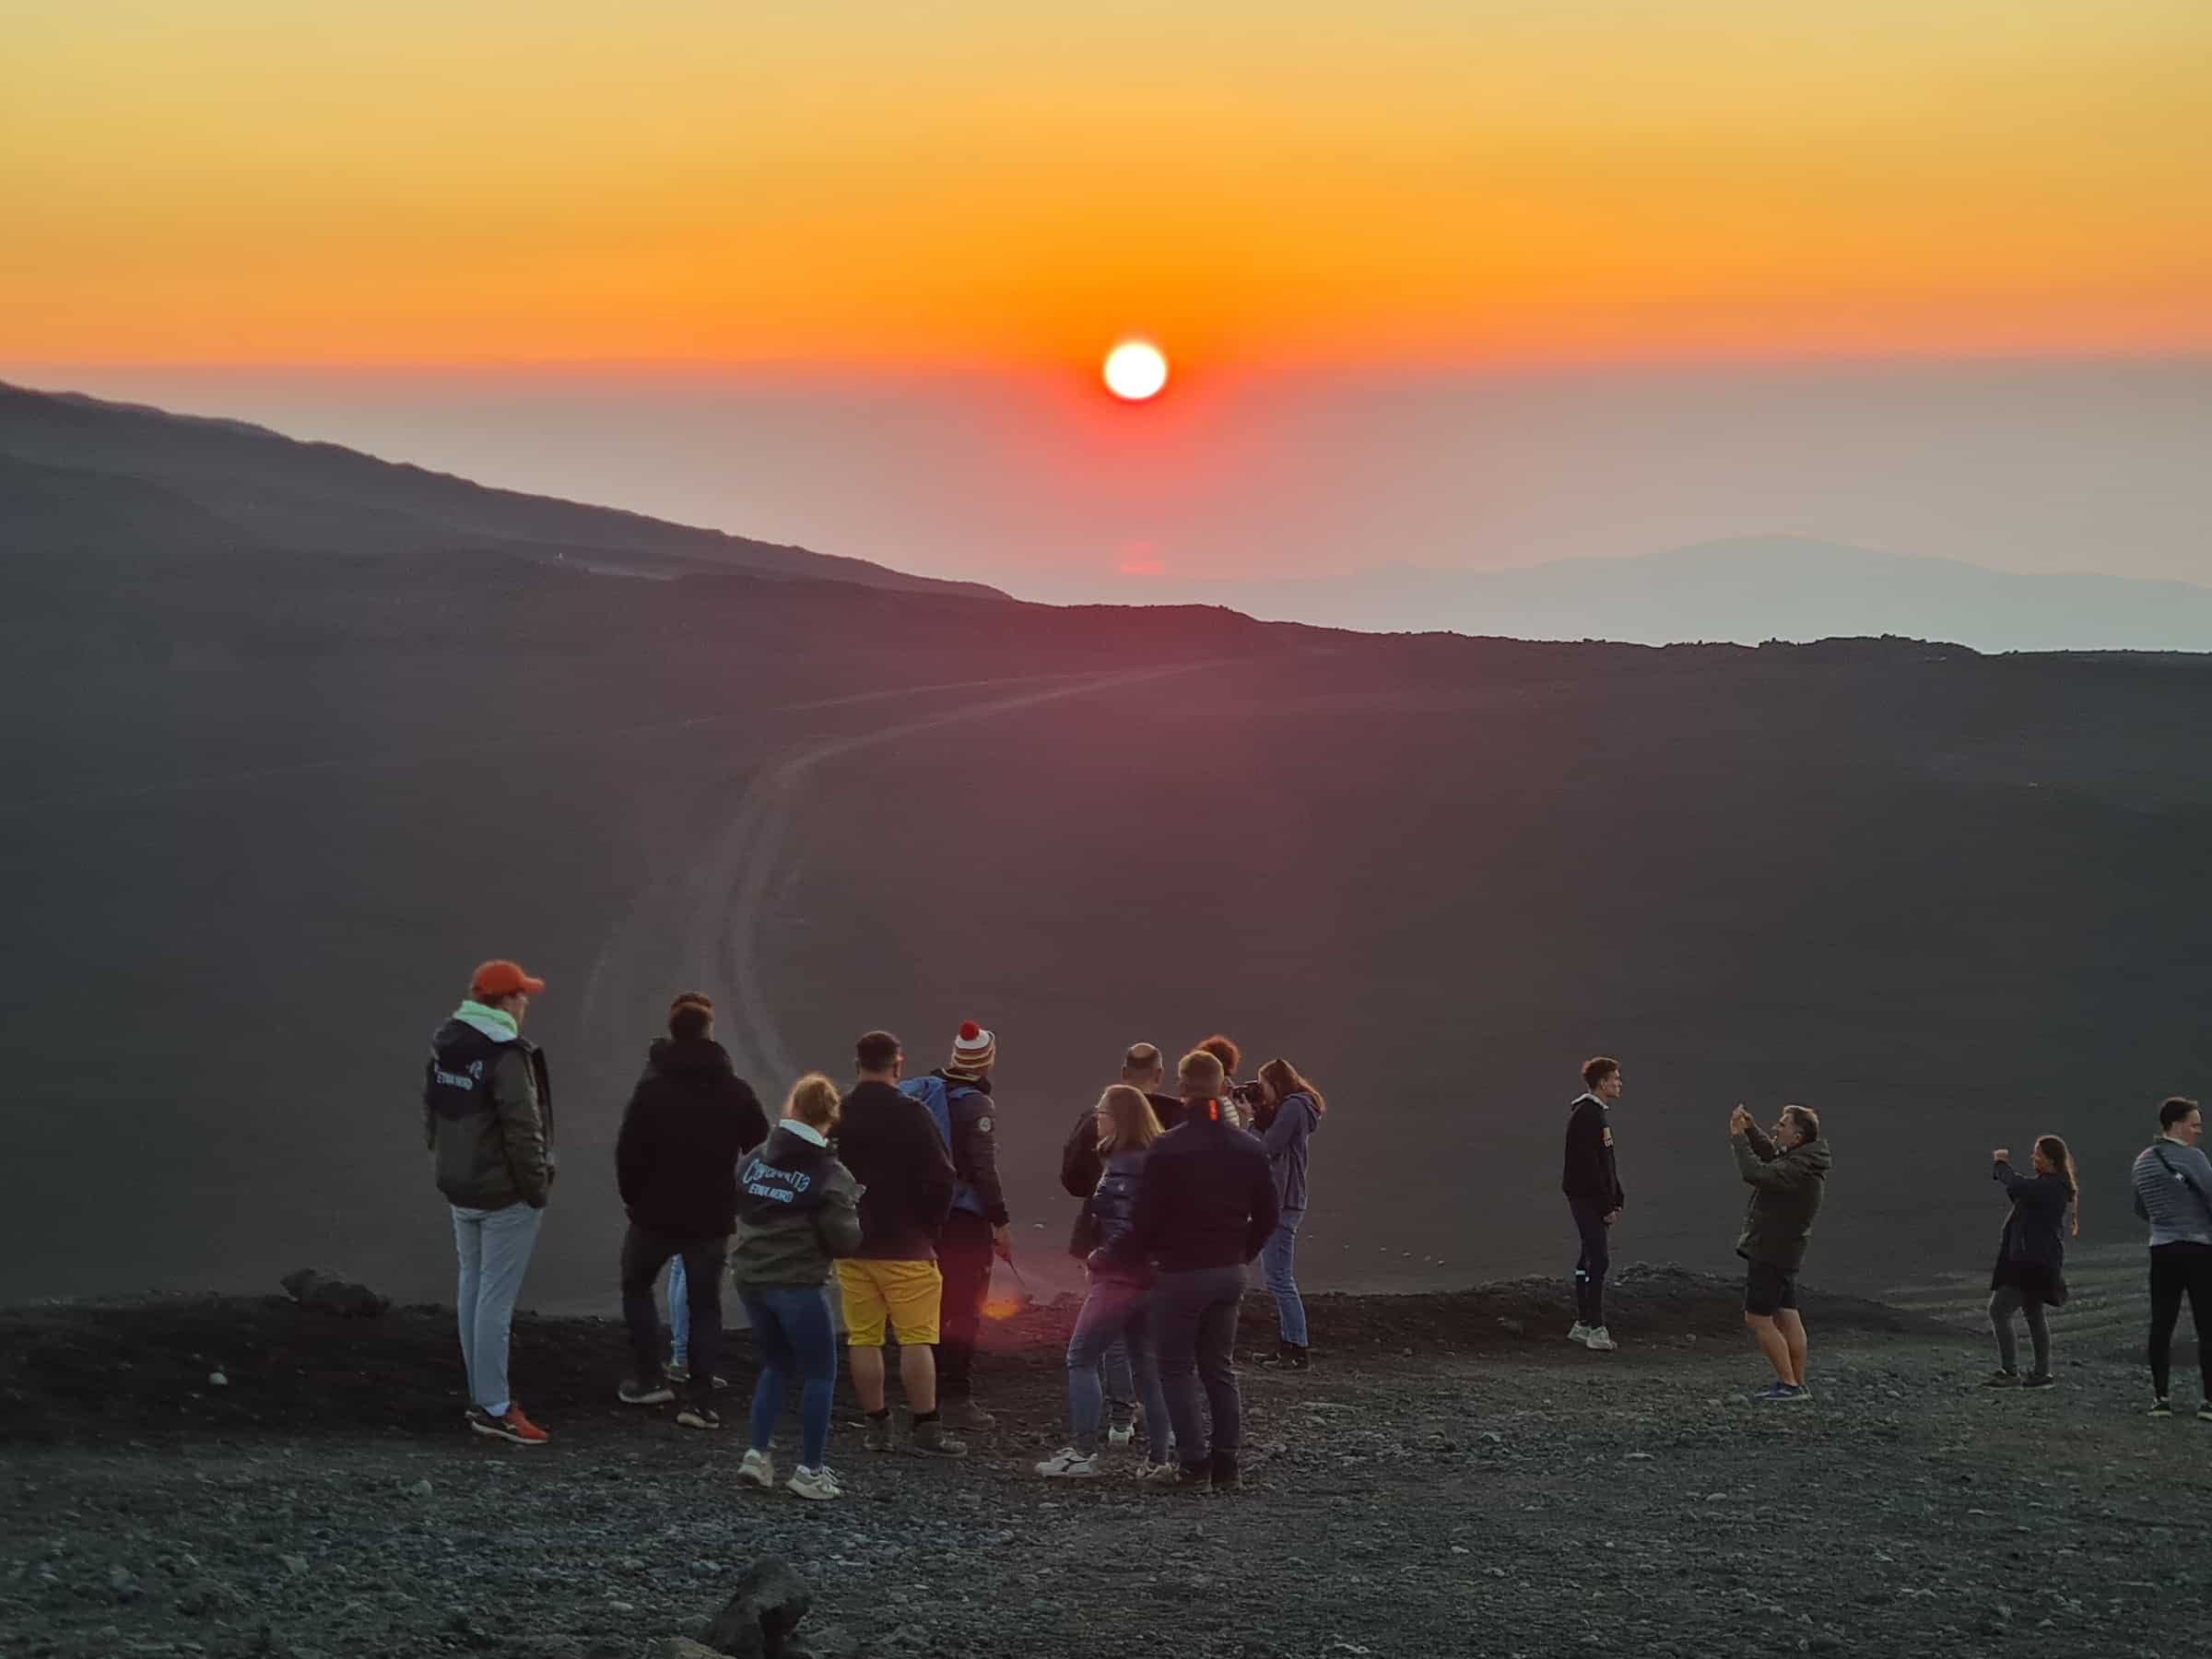 Tramonto Etna sunset 2900m